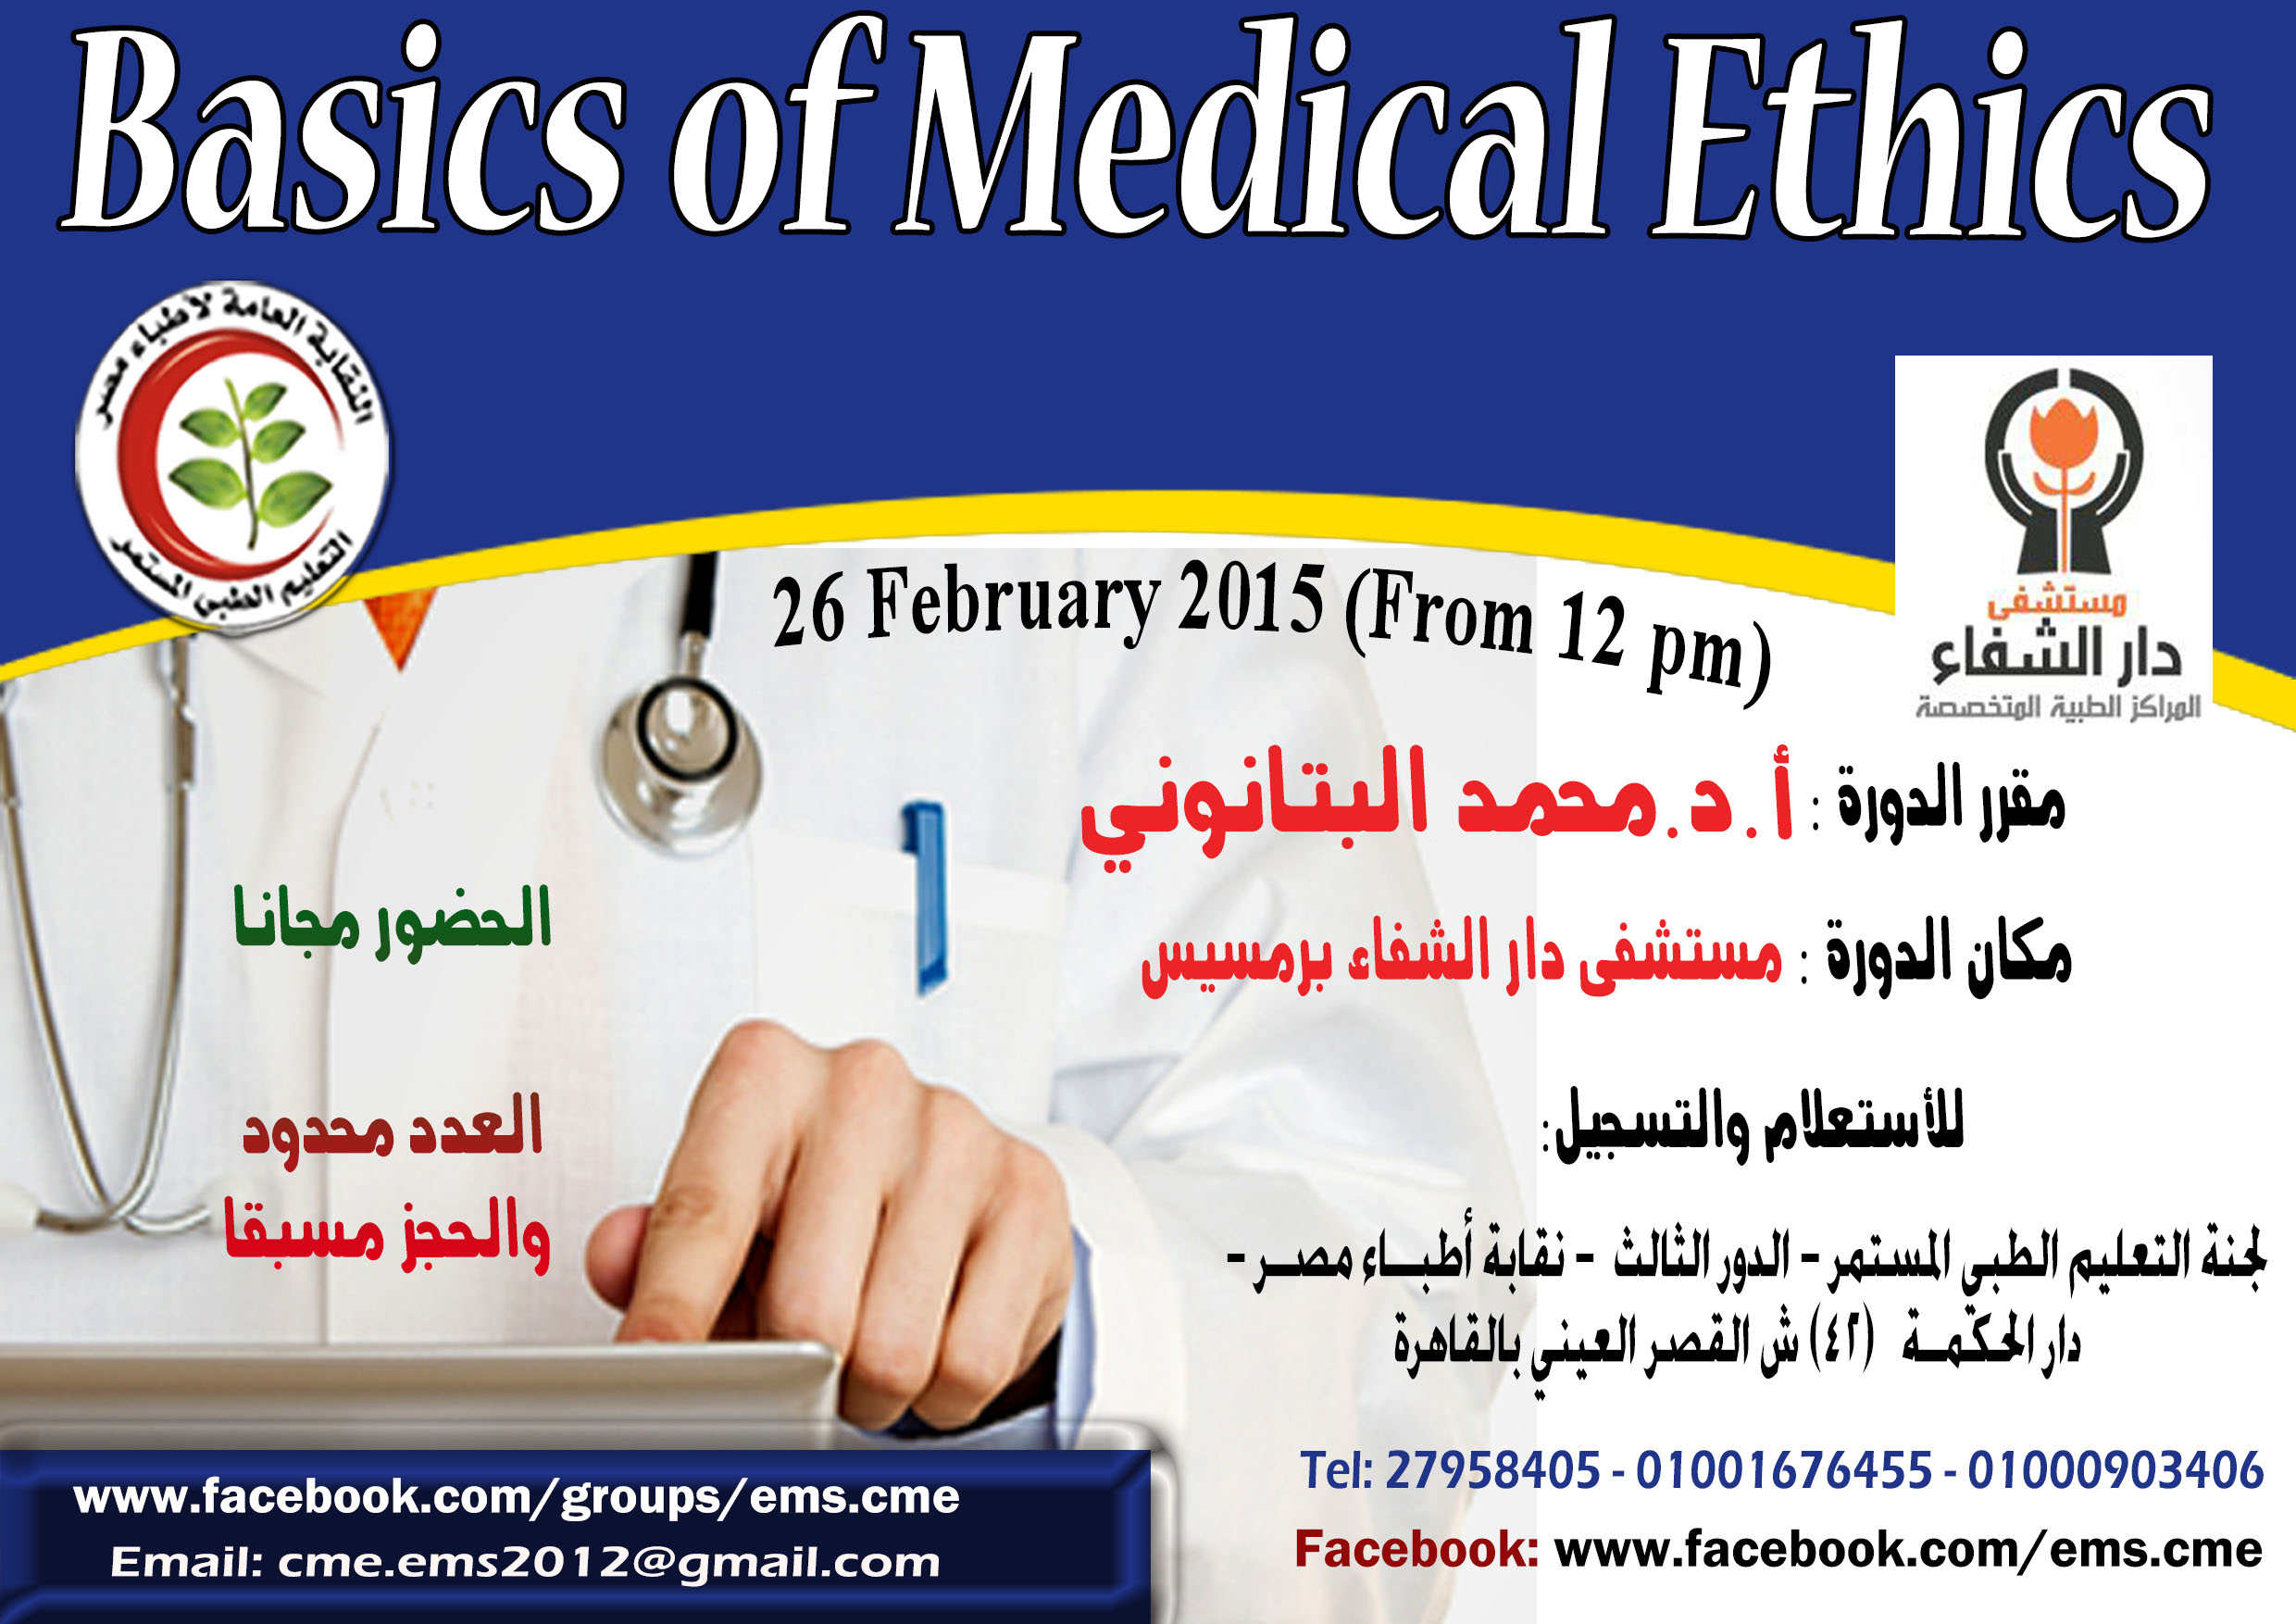 Basics of Medical Ethics